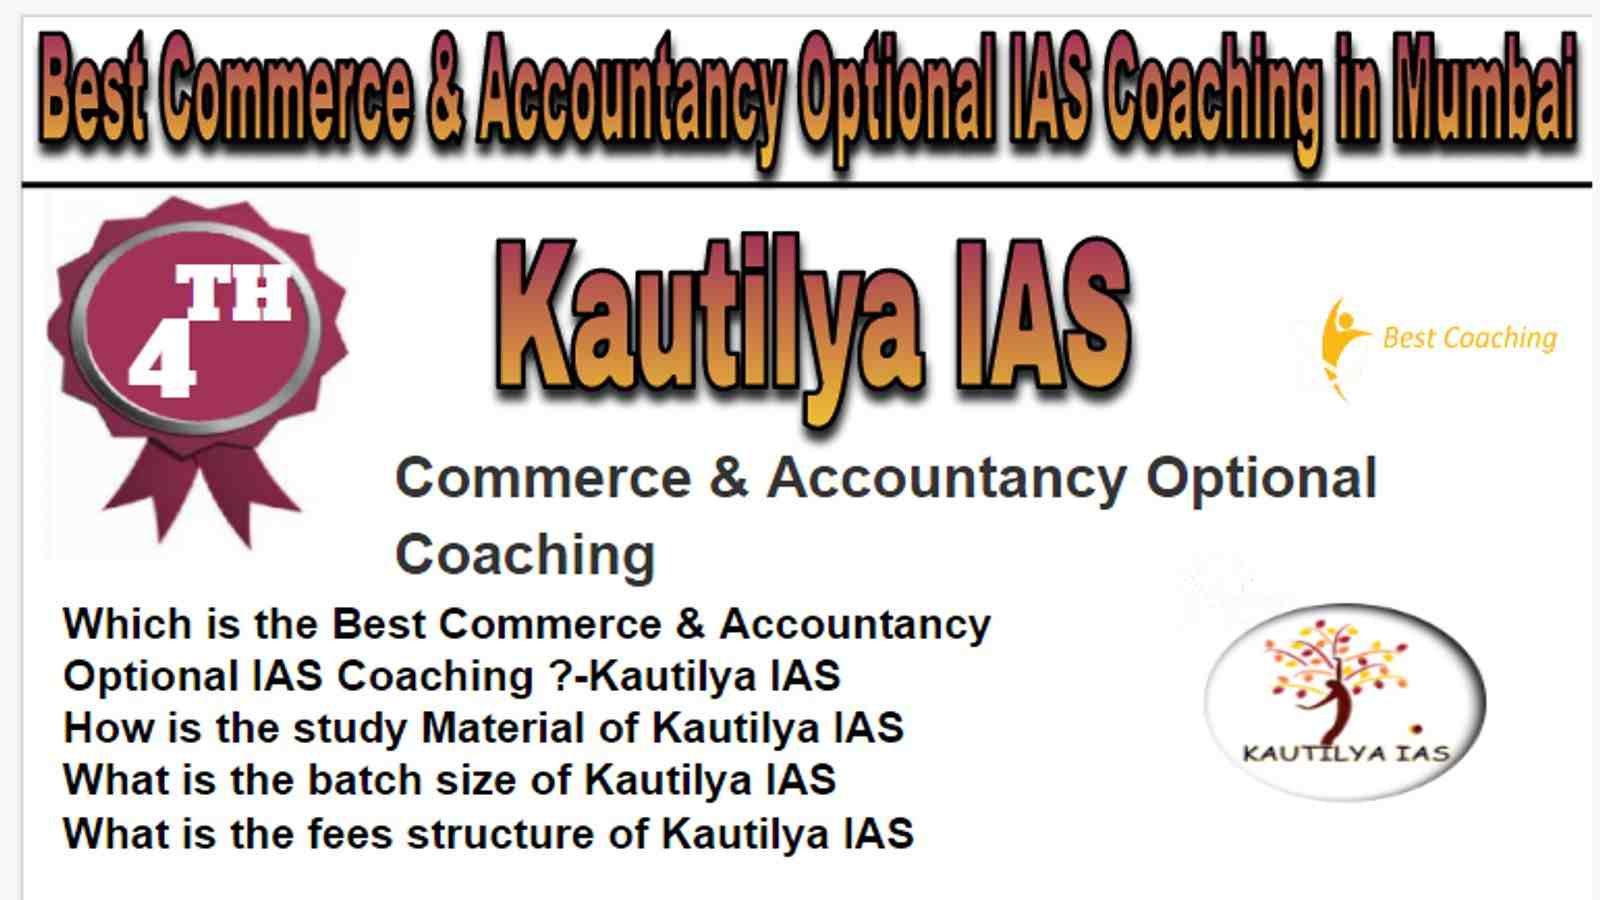 Rank 4 Best Commerce & Accountancy Optional IAS Coaching in Mumbai